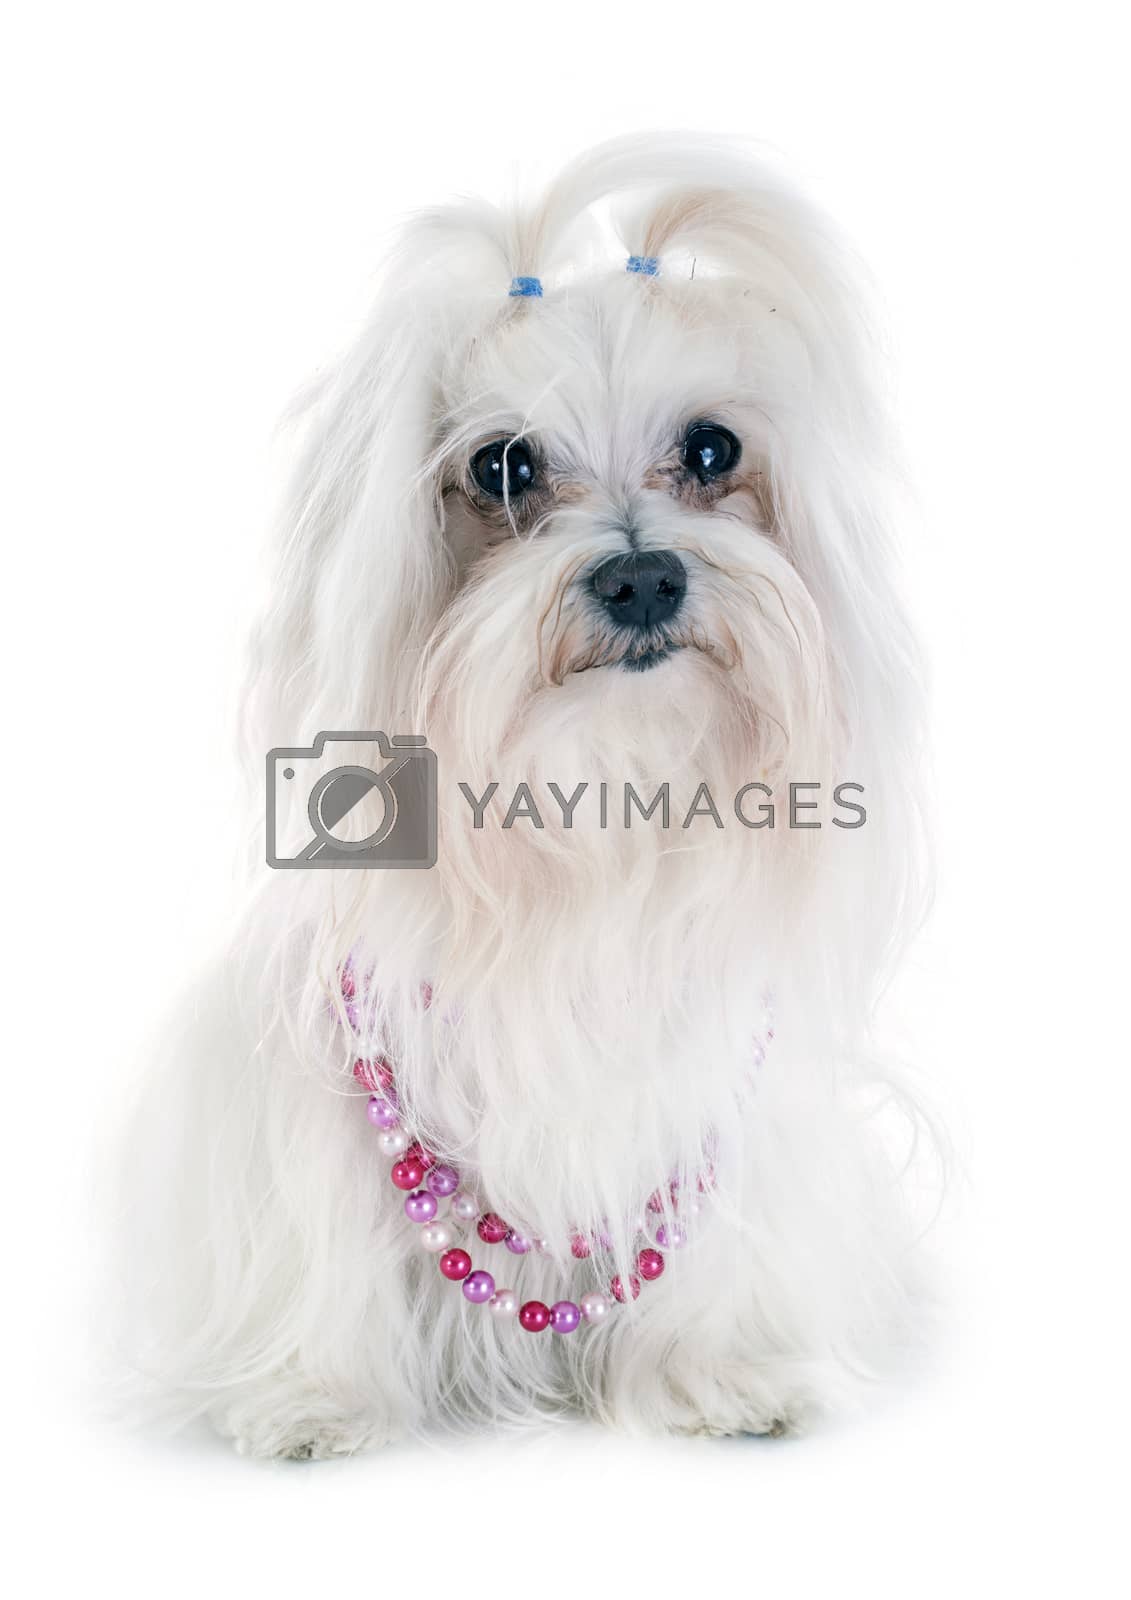 Royalty free image of maltese dog by cynoclub